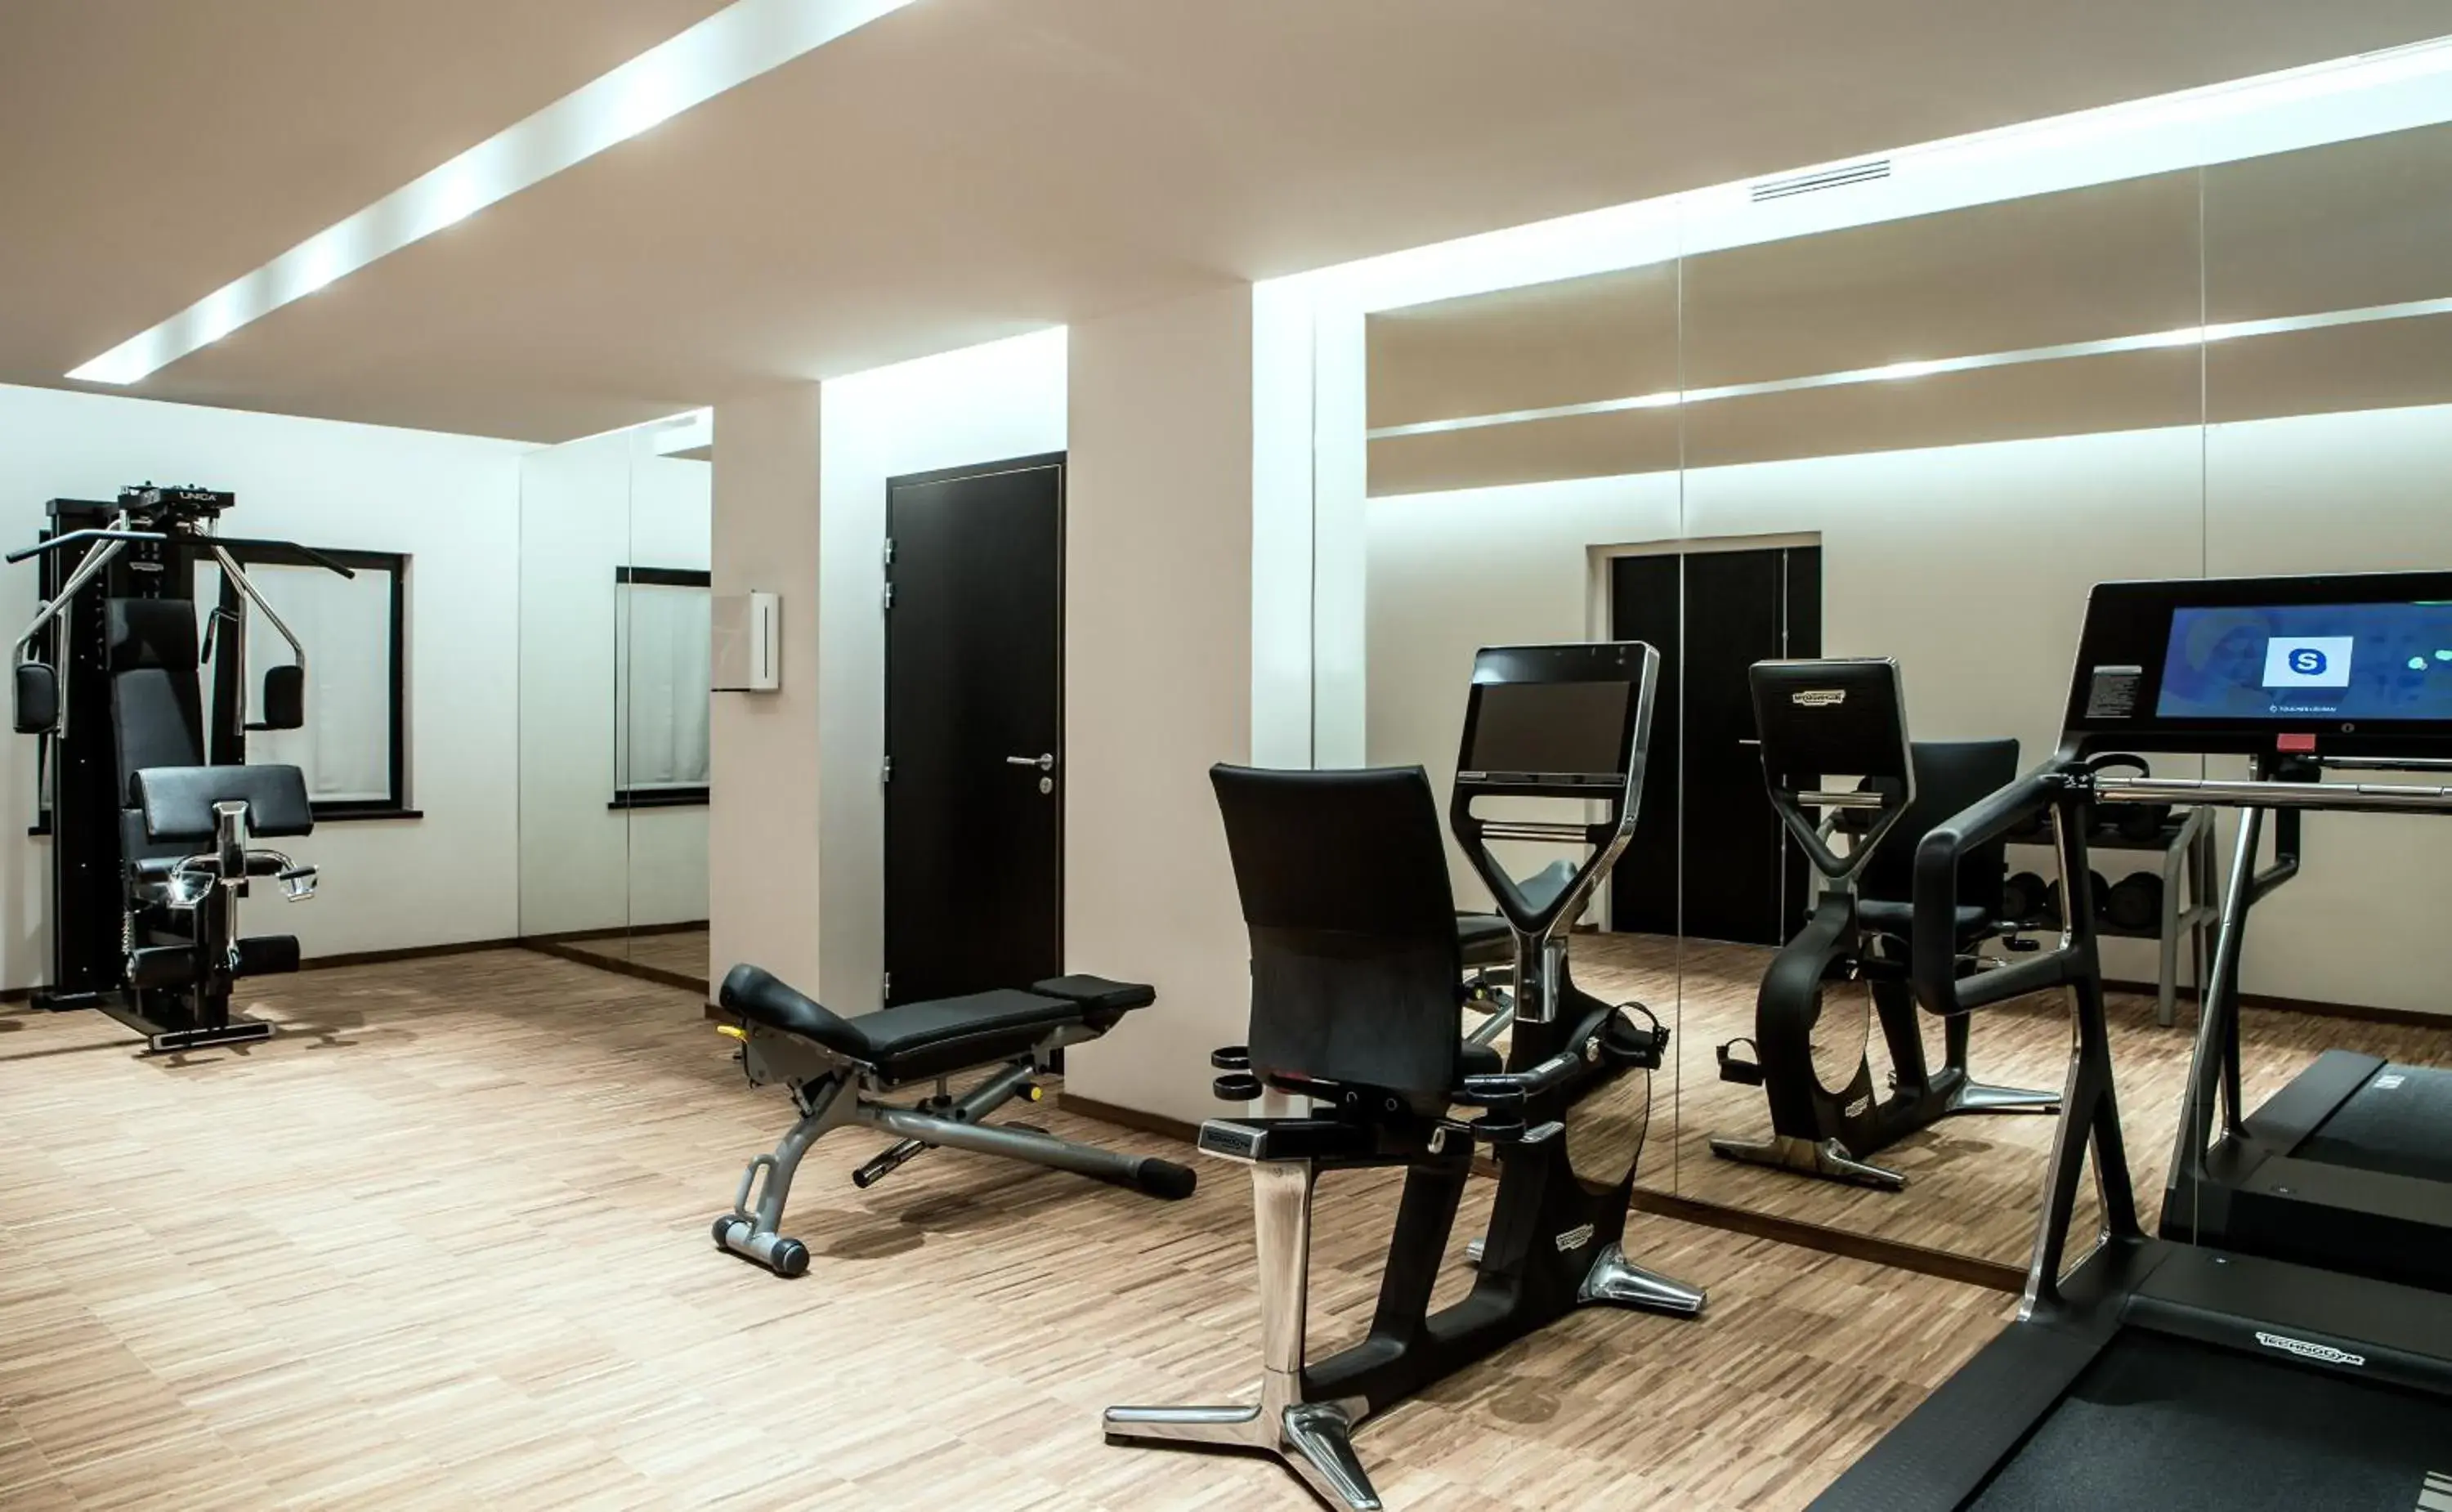 Fitness centre/facilities, Fitness Center/Facilities in Hotel Louvre Lens - Esprit de France